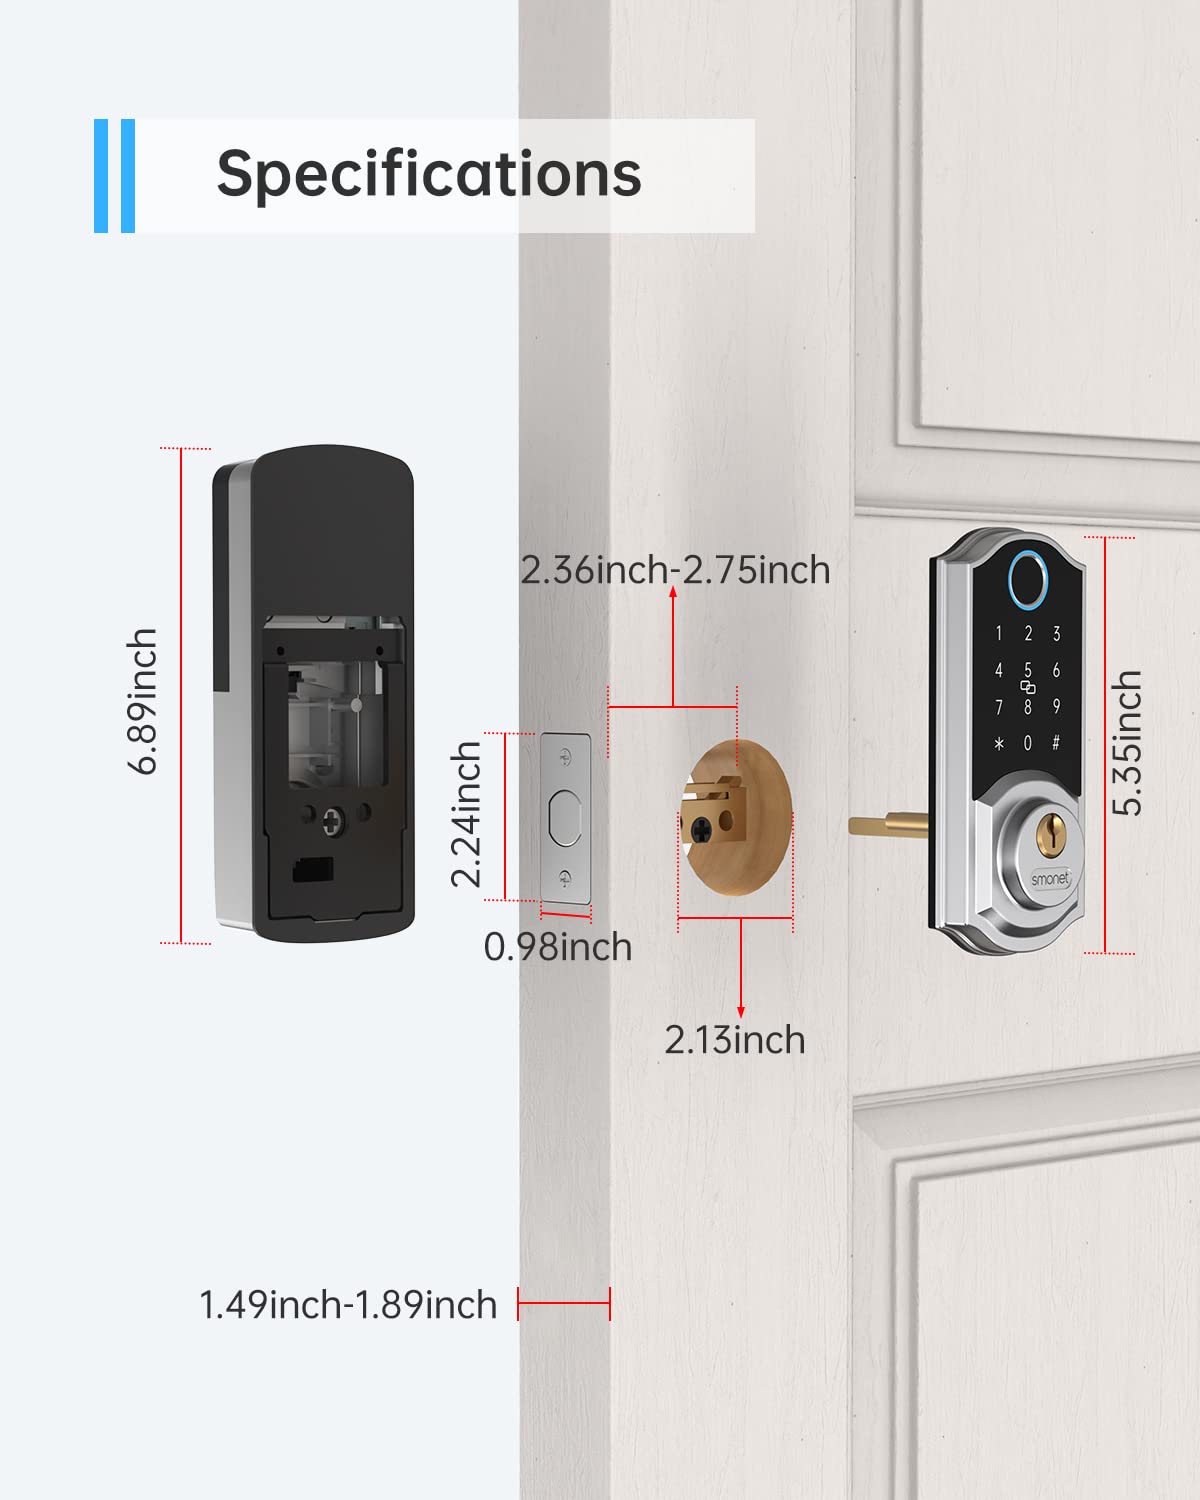 Smart lock specifications